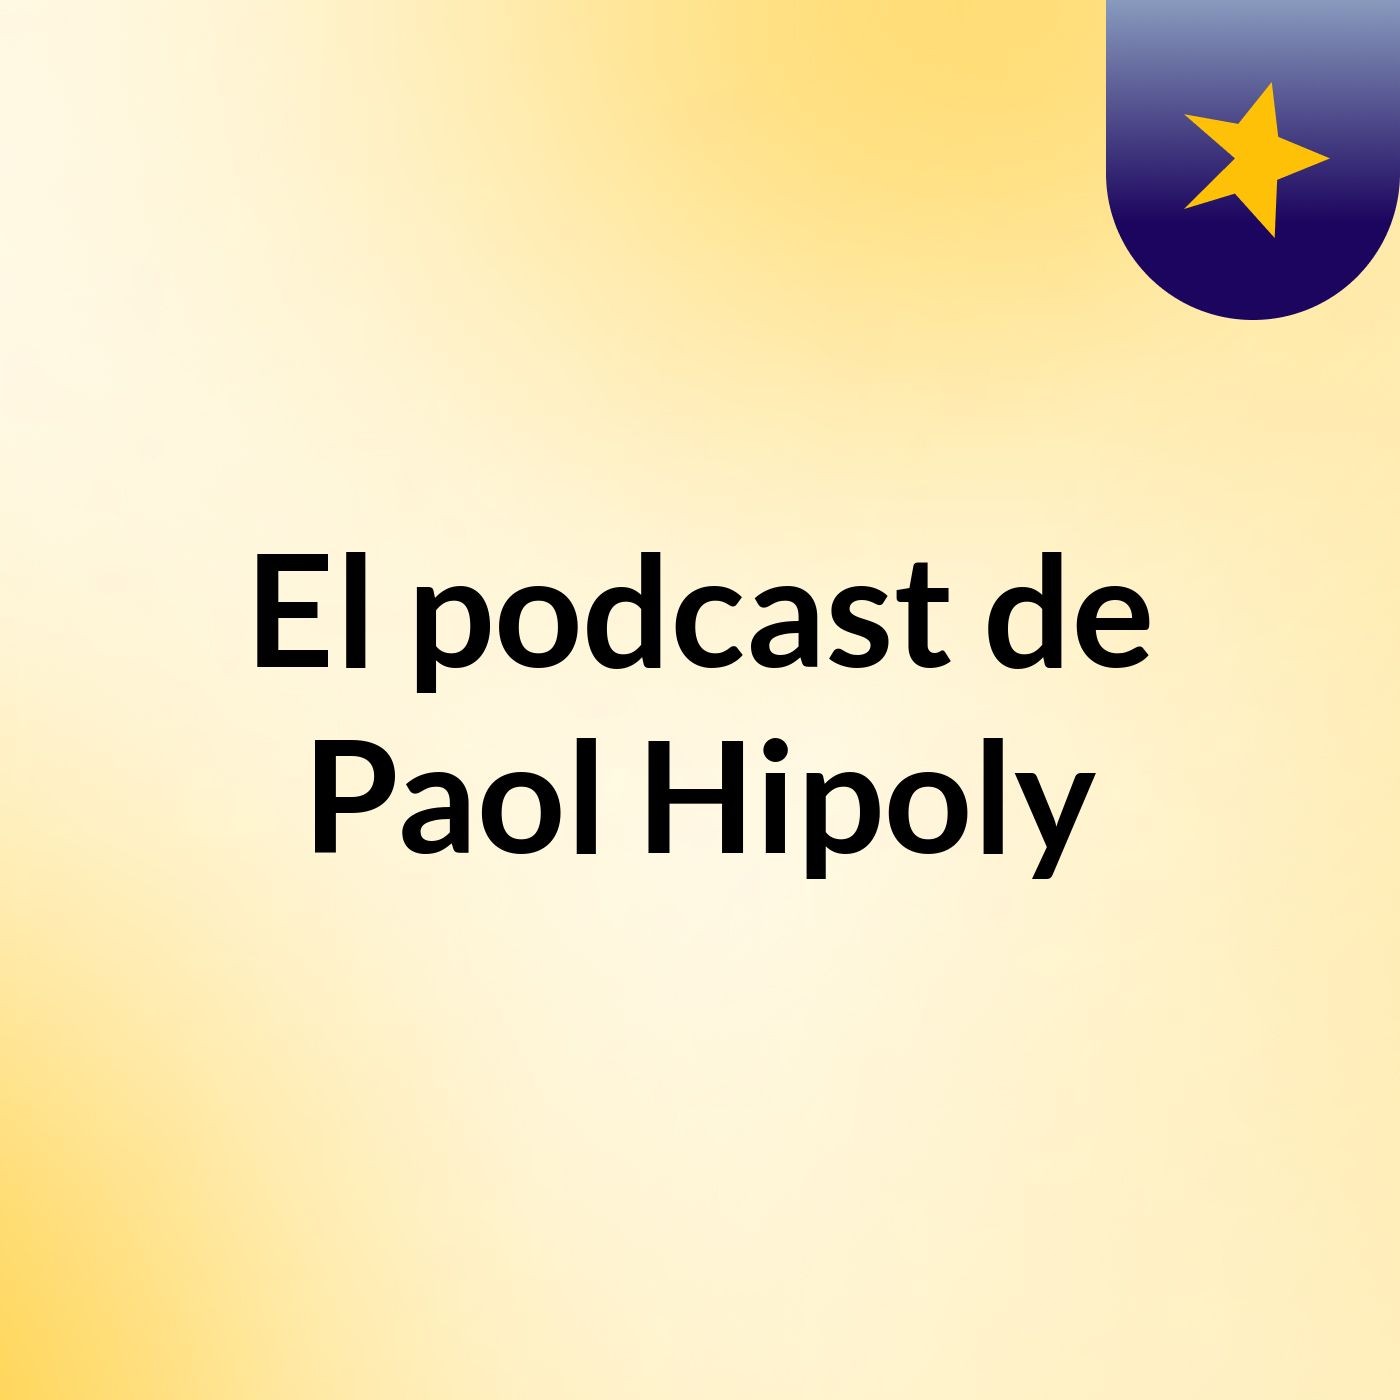 El podcast de Paol Hipoly